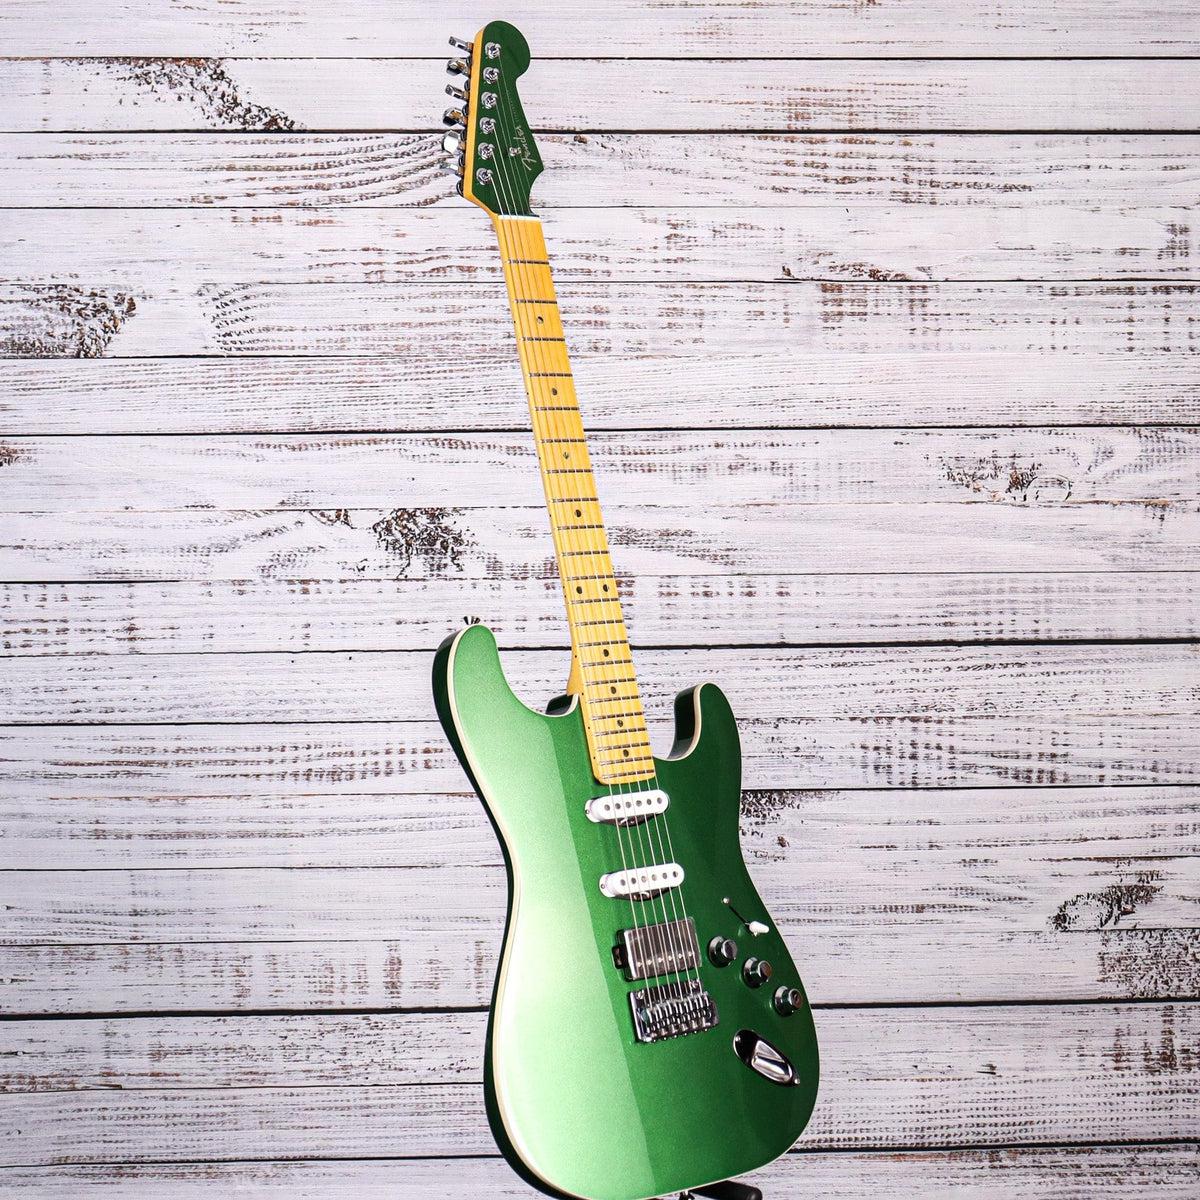 Fender Aerodyne Special Stratocaster® Electric Guitar | HSS |Speed Green Metallic